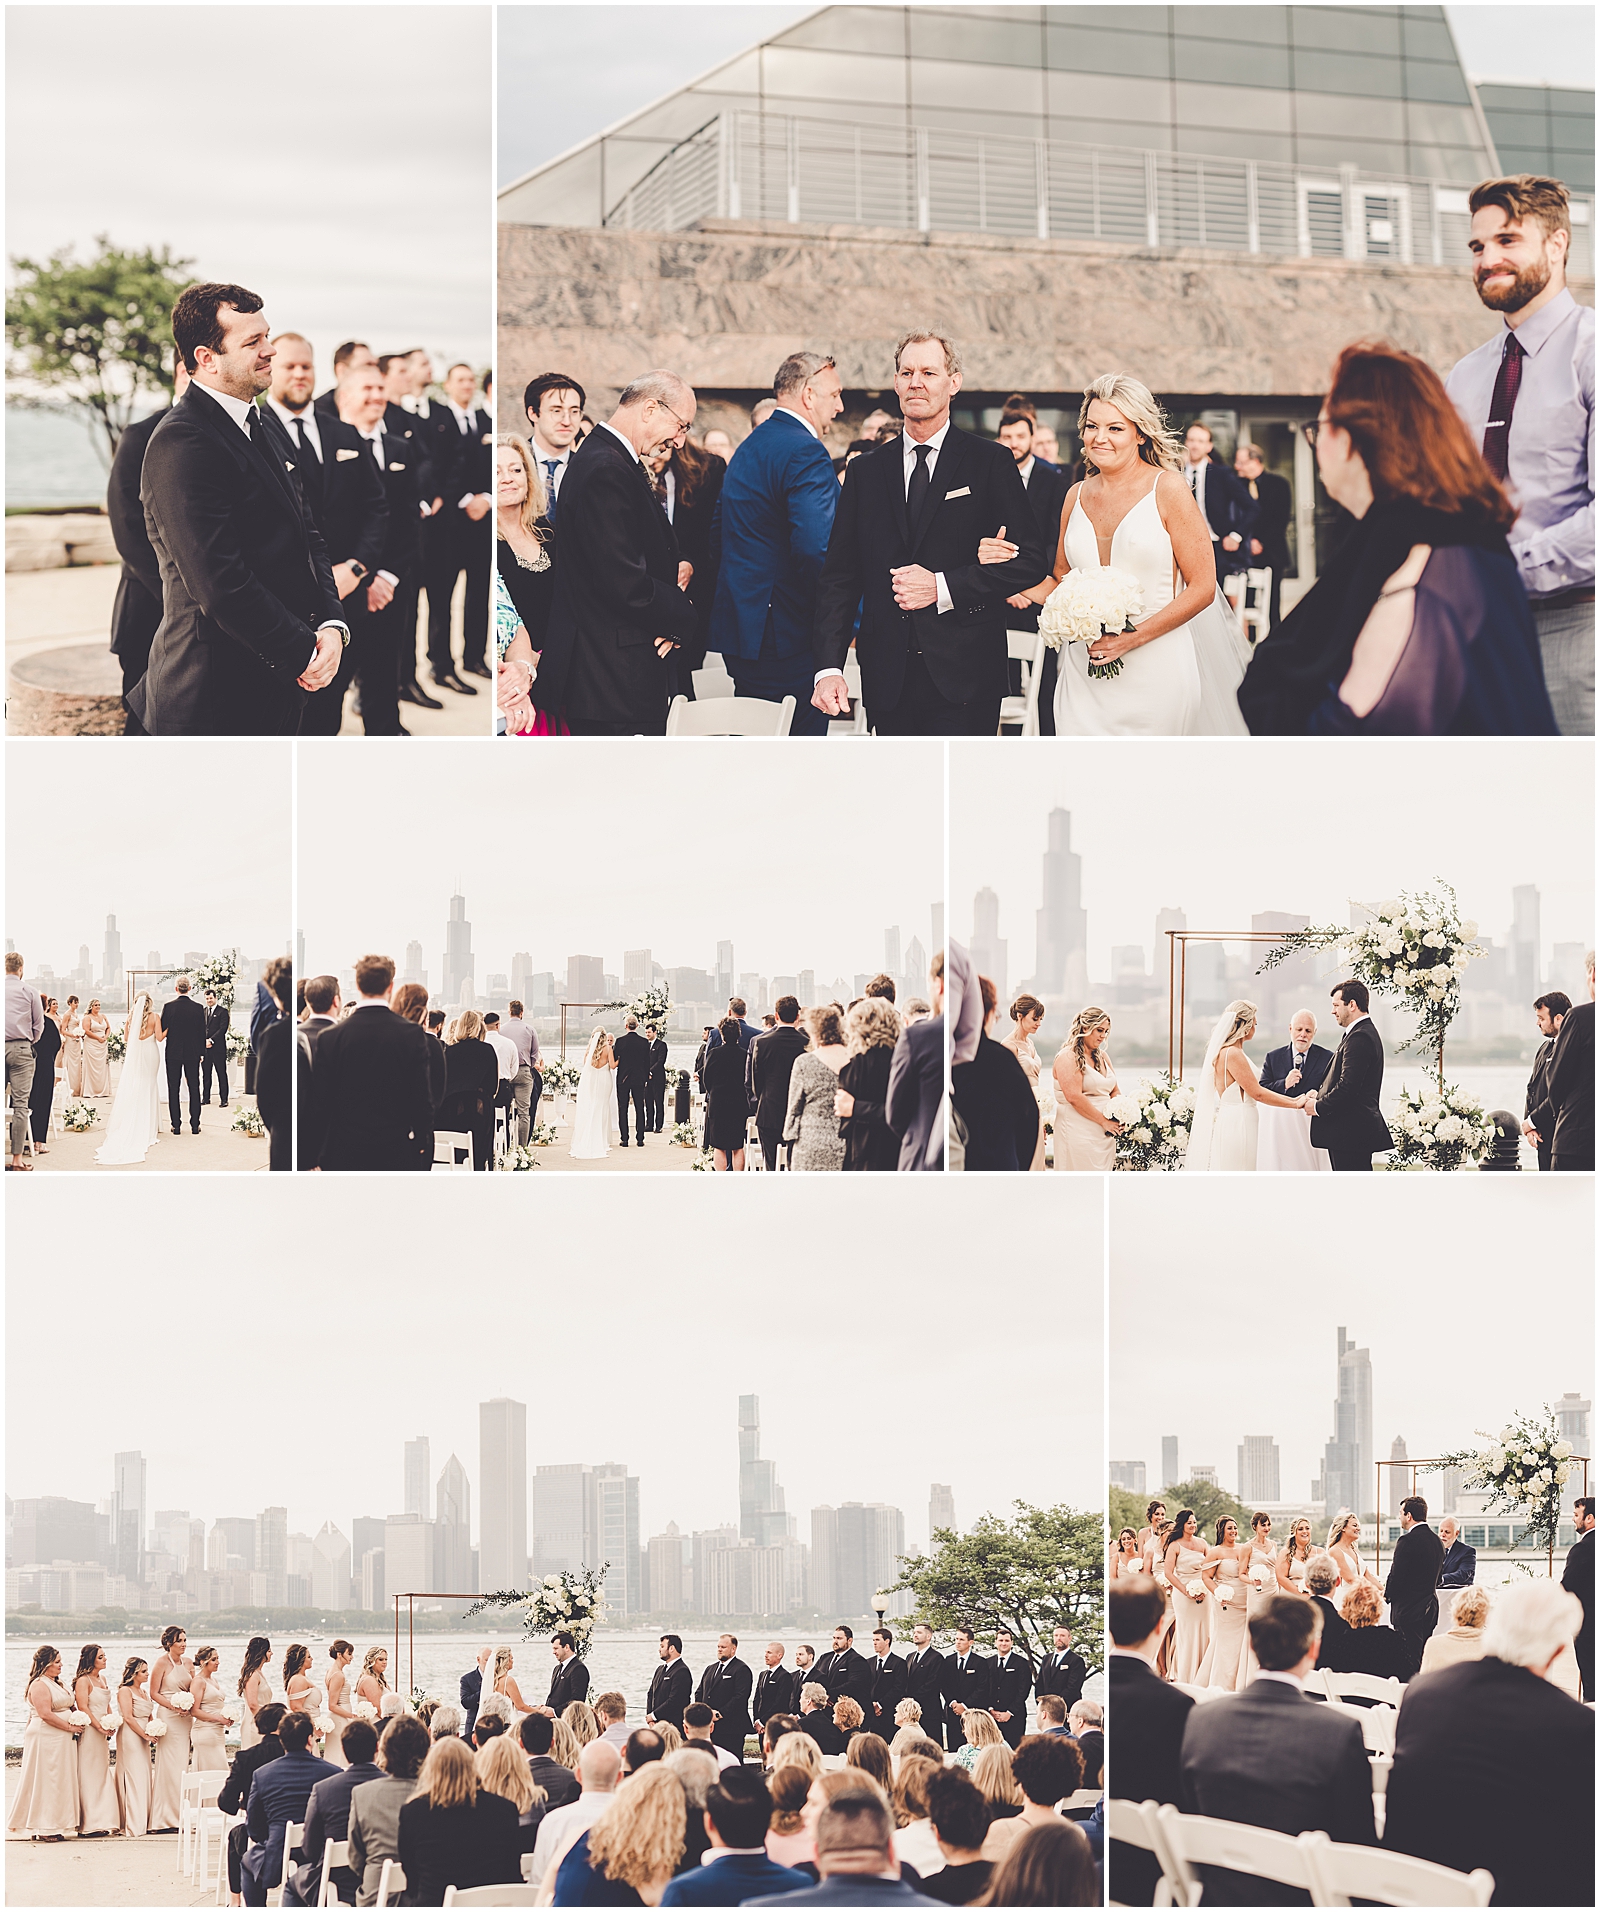 Shelby and Tim's Adler Planetarium wedding photos in Chicago, Illinois with Chicagoland wedding photographer Kara Evans Photographer.